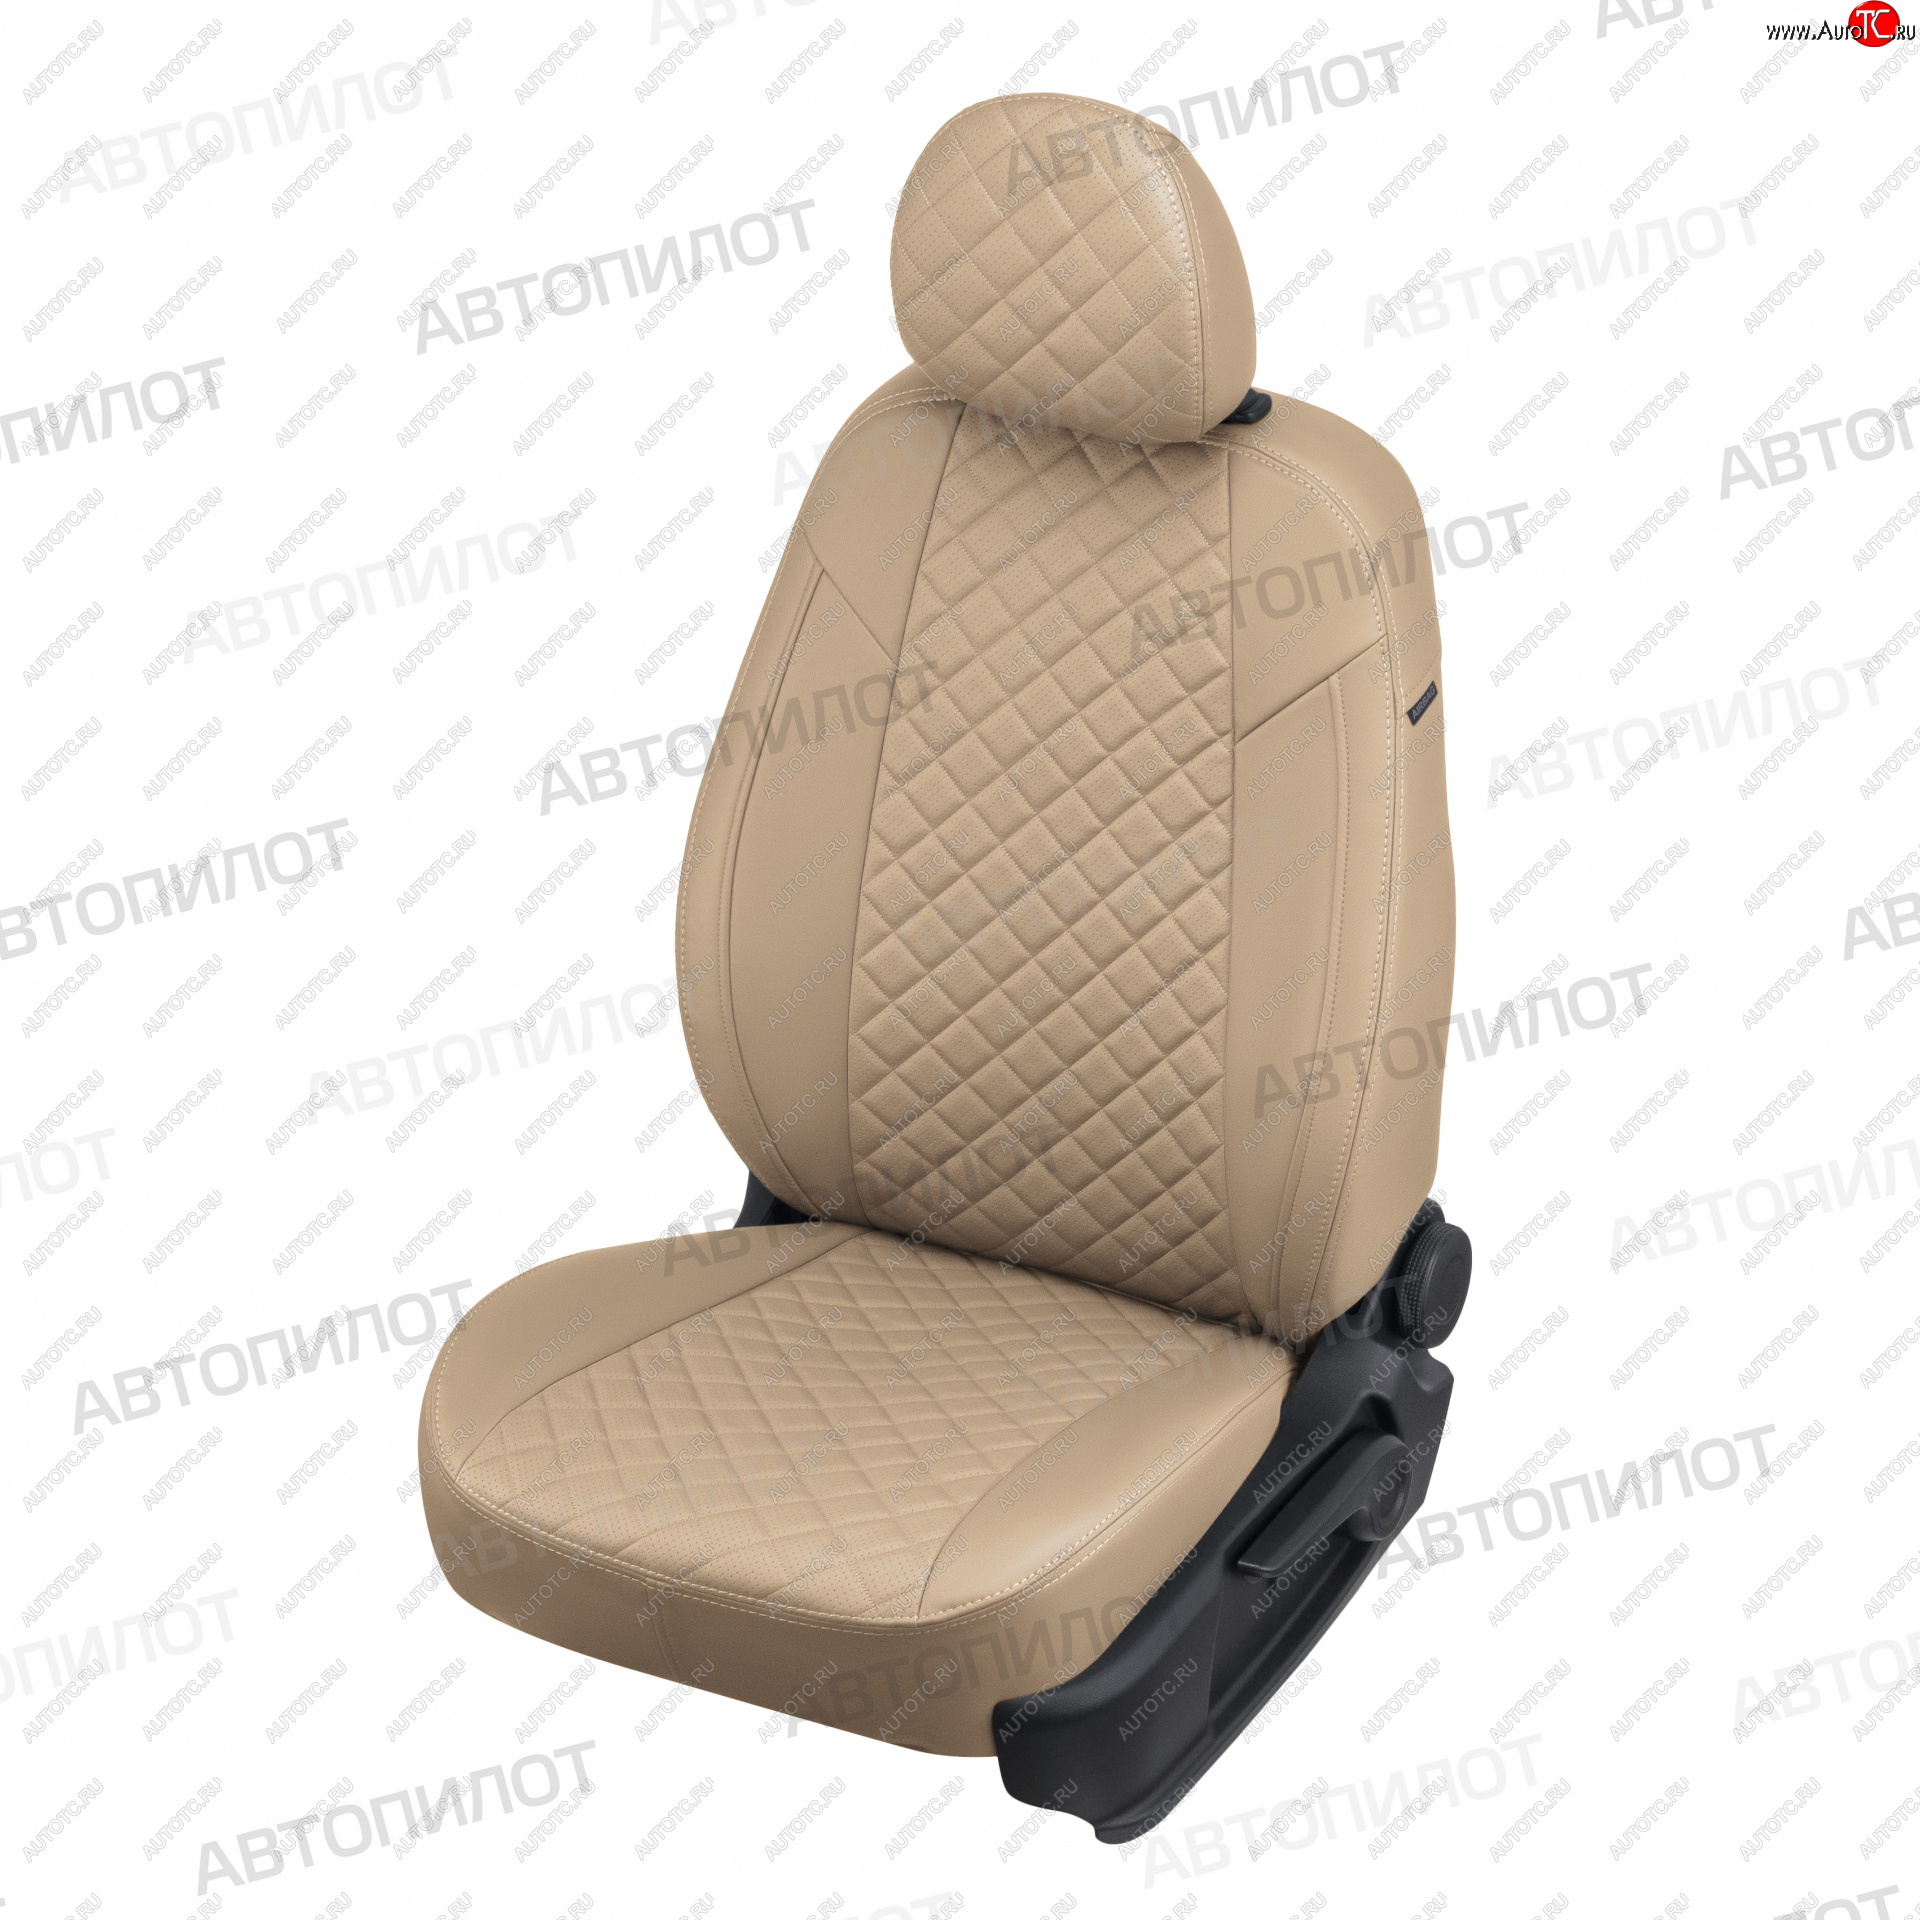 13 999 р. Чехлы сидений (экокожа) Автопилот Ромб  Ford Fiesta  5 (2001-2008) (темно-бежевый)